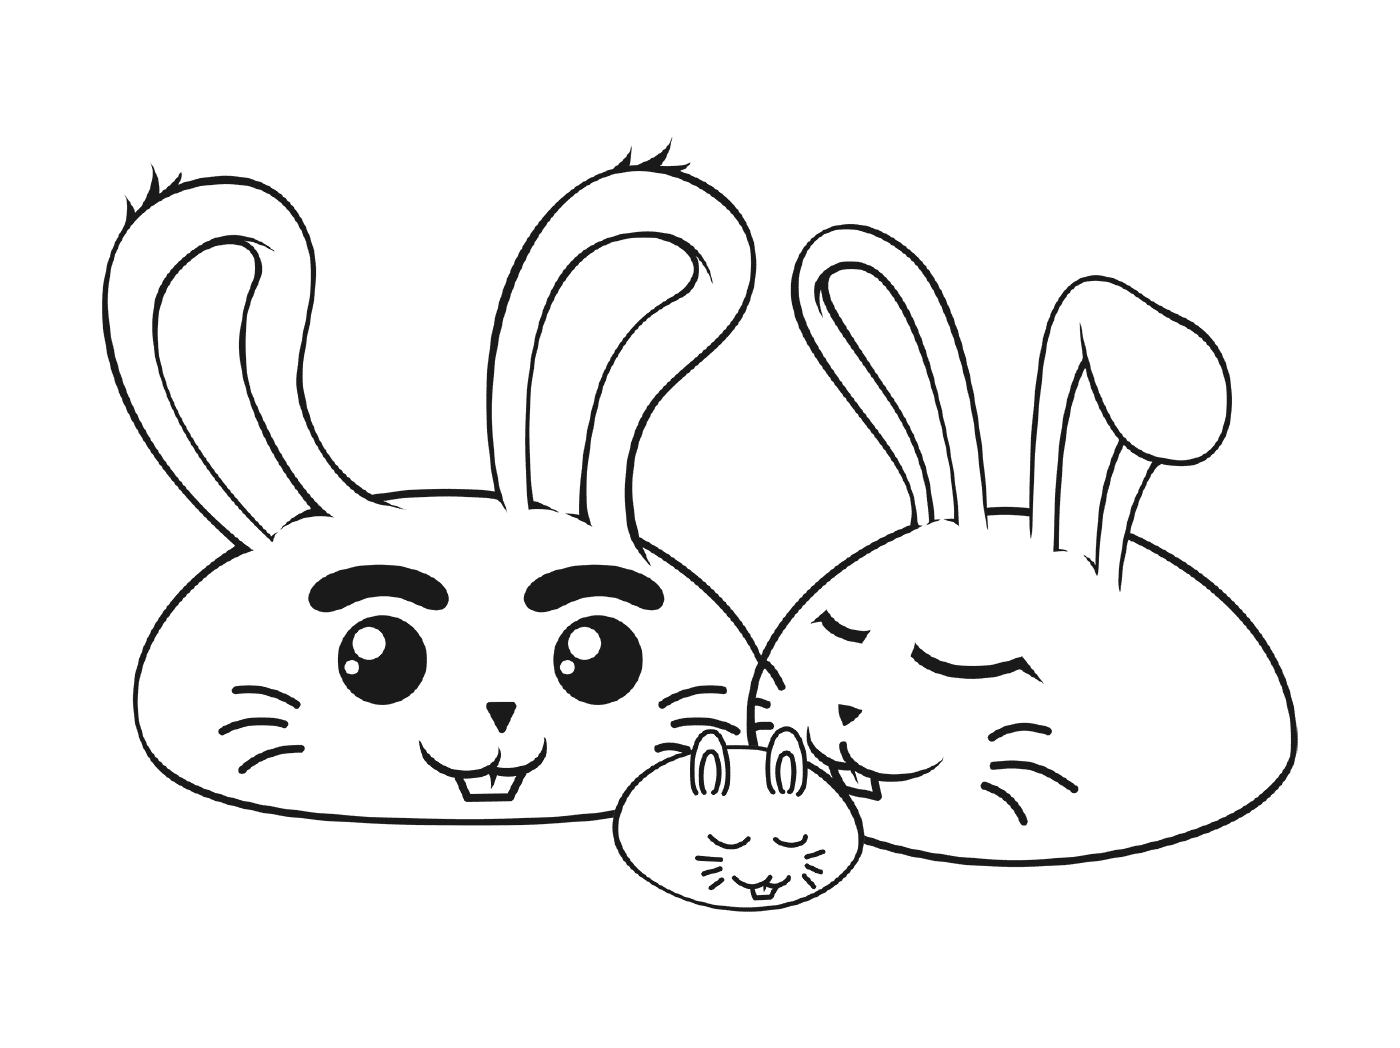  Family of rabbit kawaii 